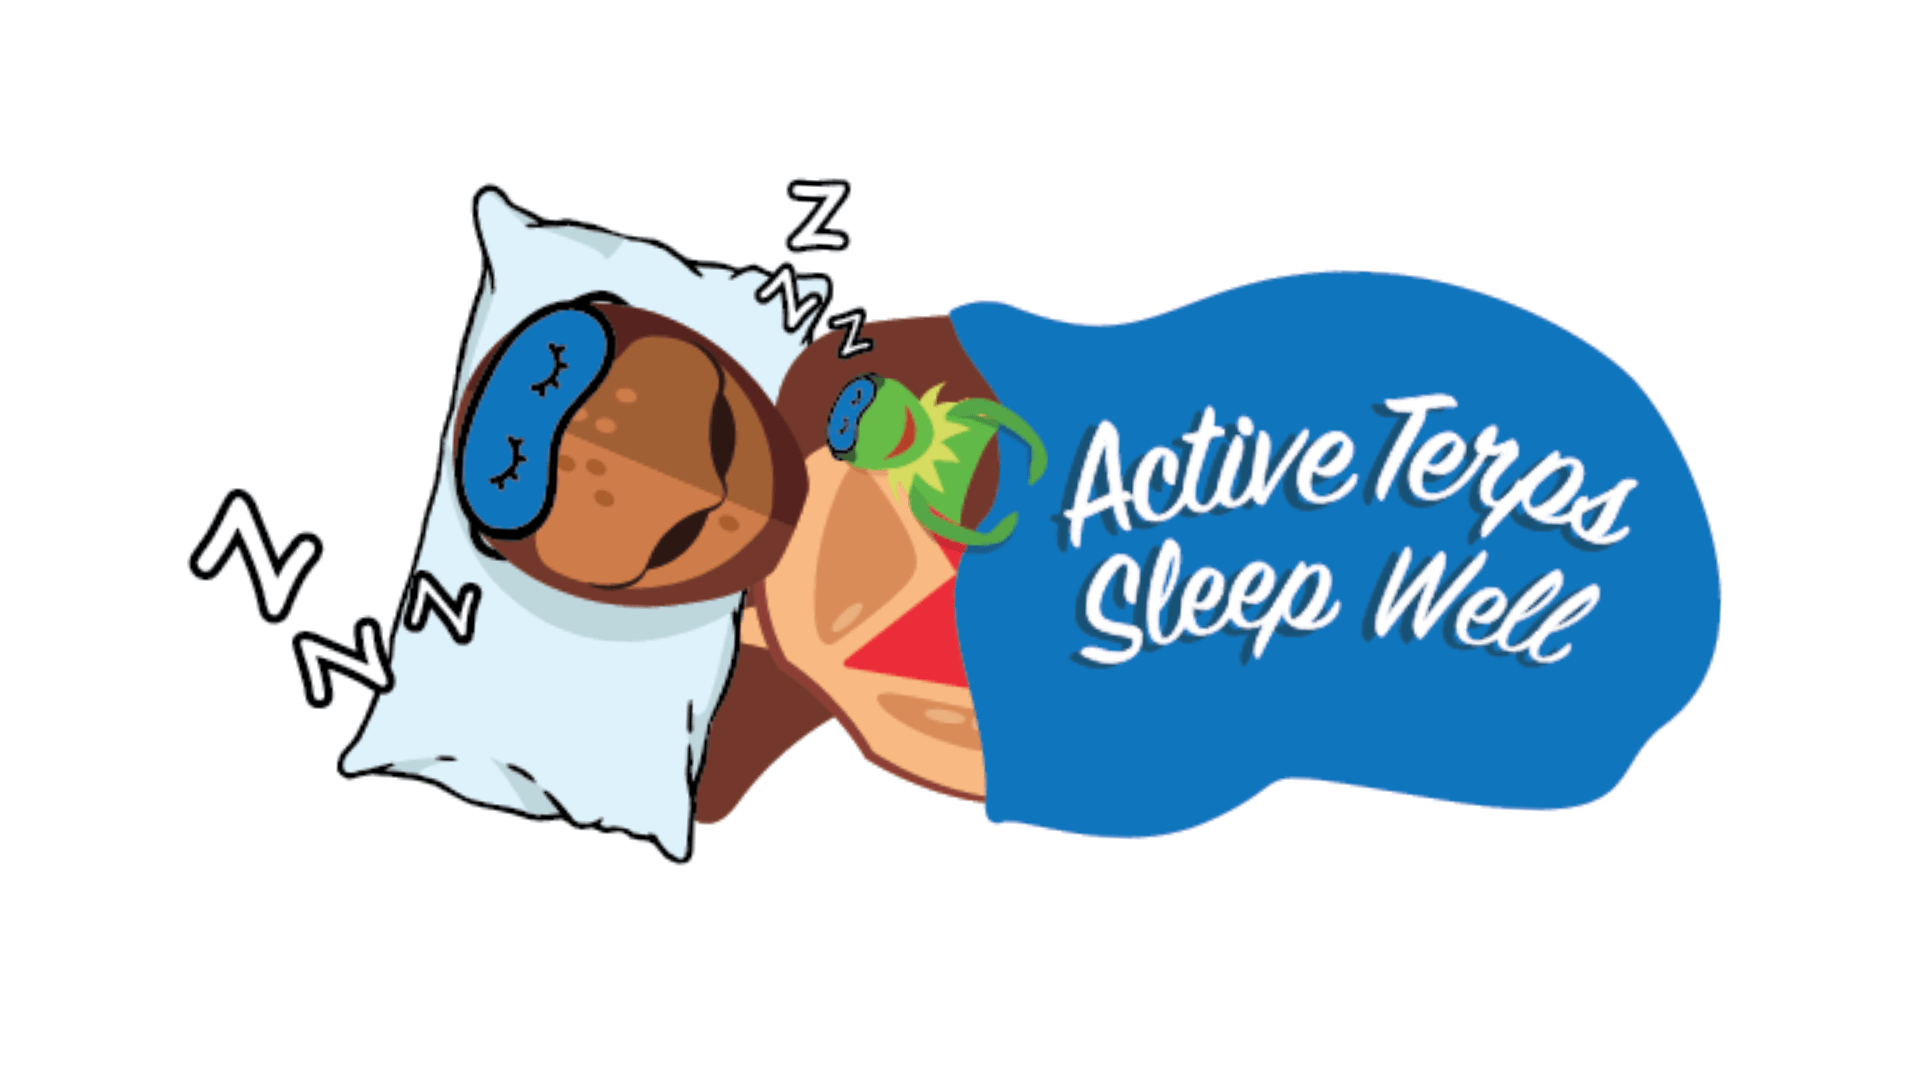 active terps sleep well sticker